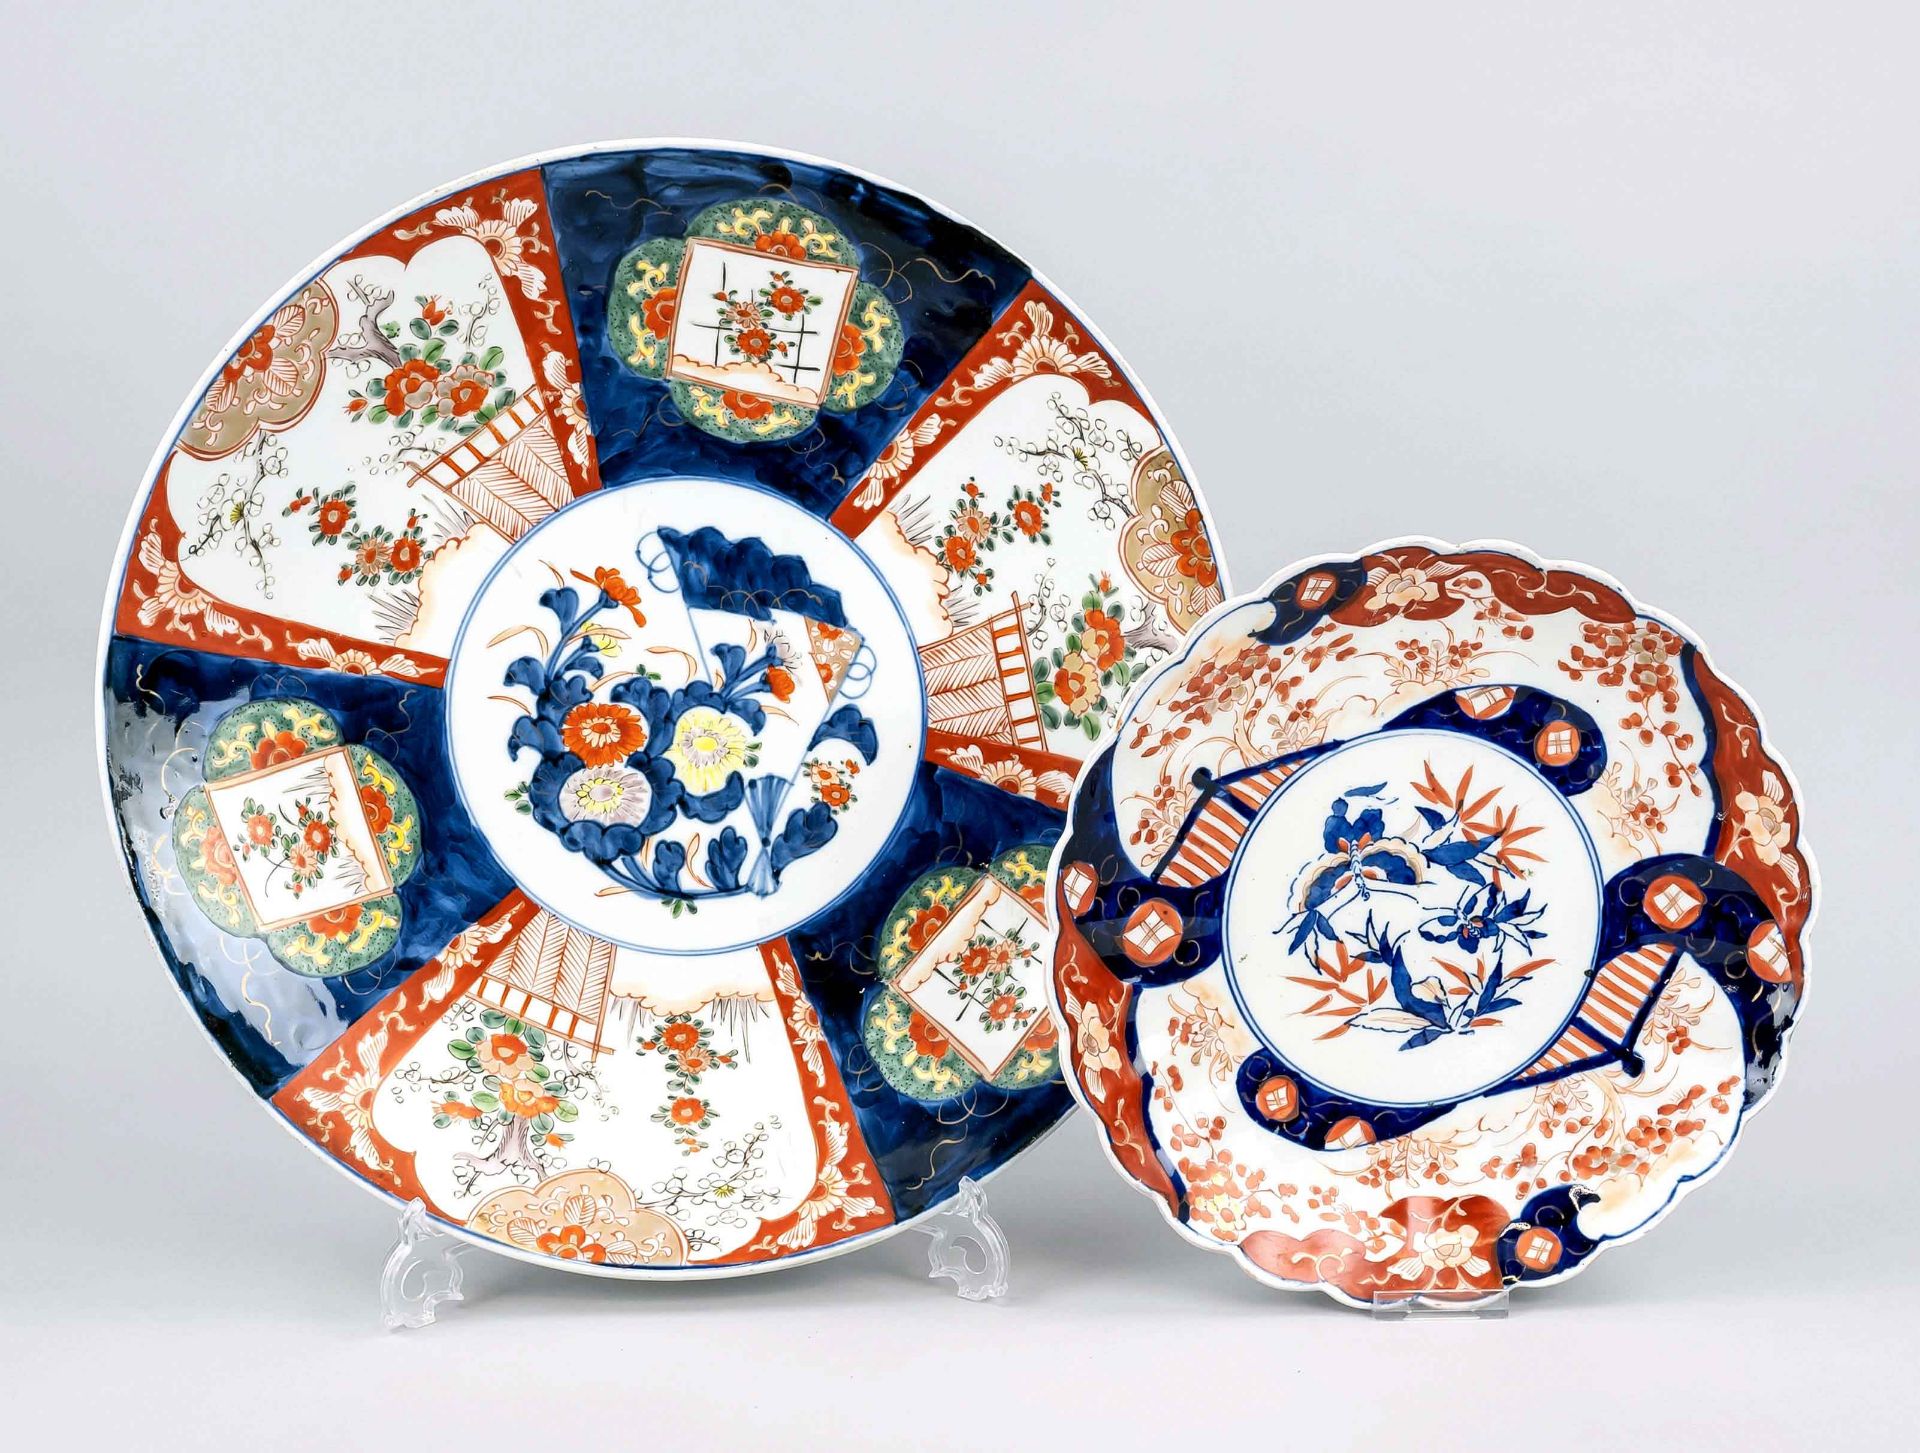 2 Imari plates, Japan, around 1900, porcelain with polychrome glaze colors, chrysanthemums and